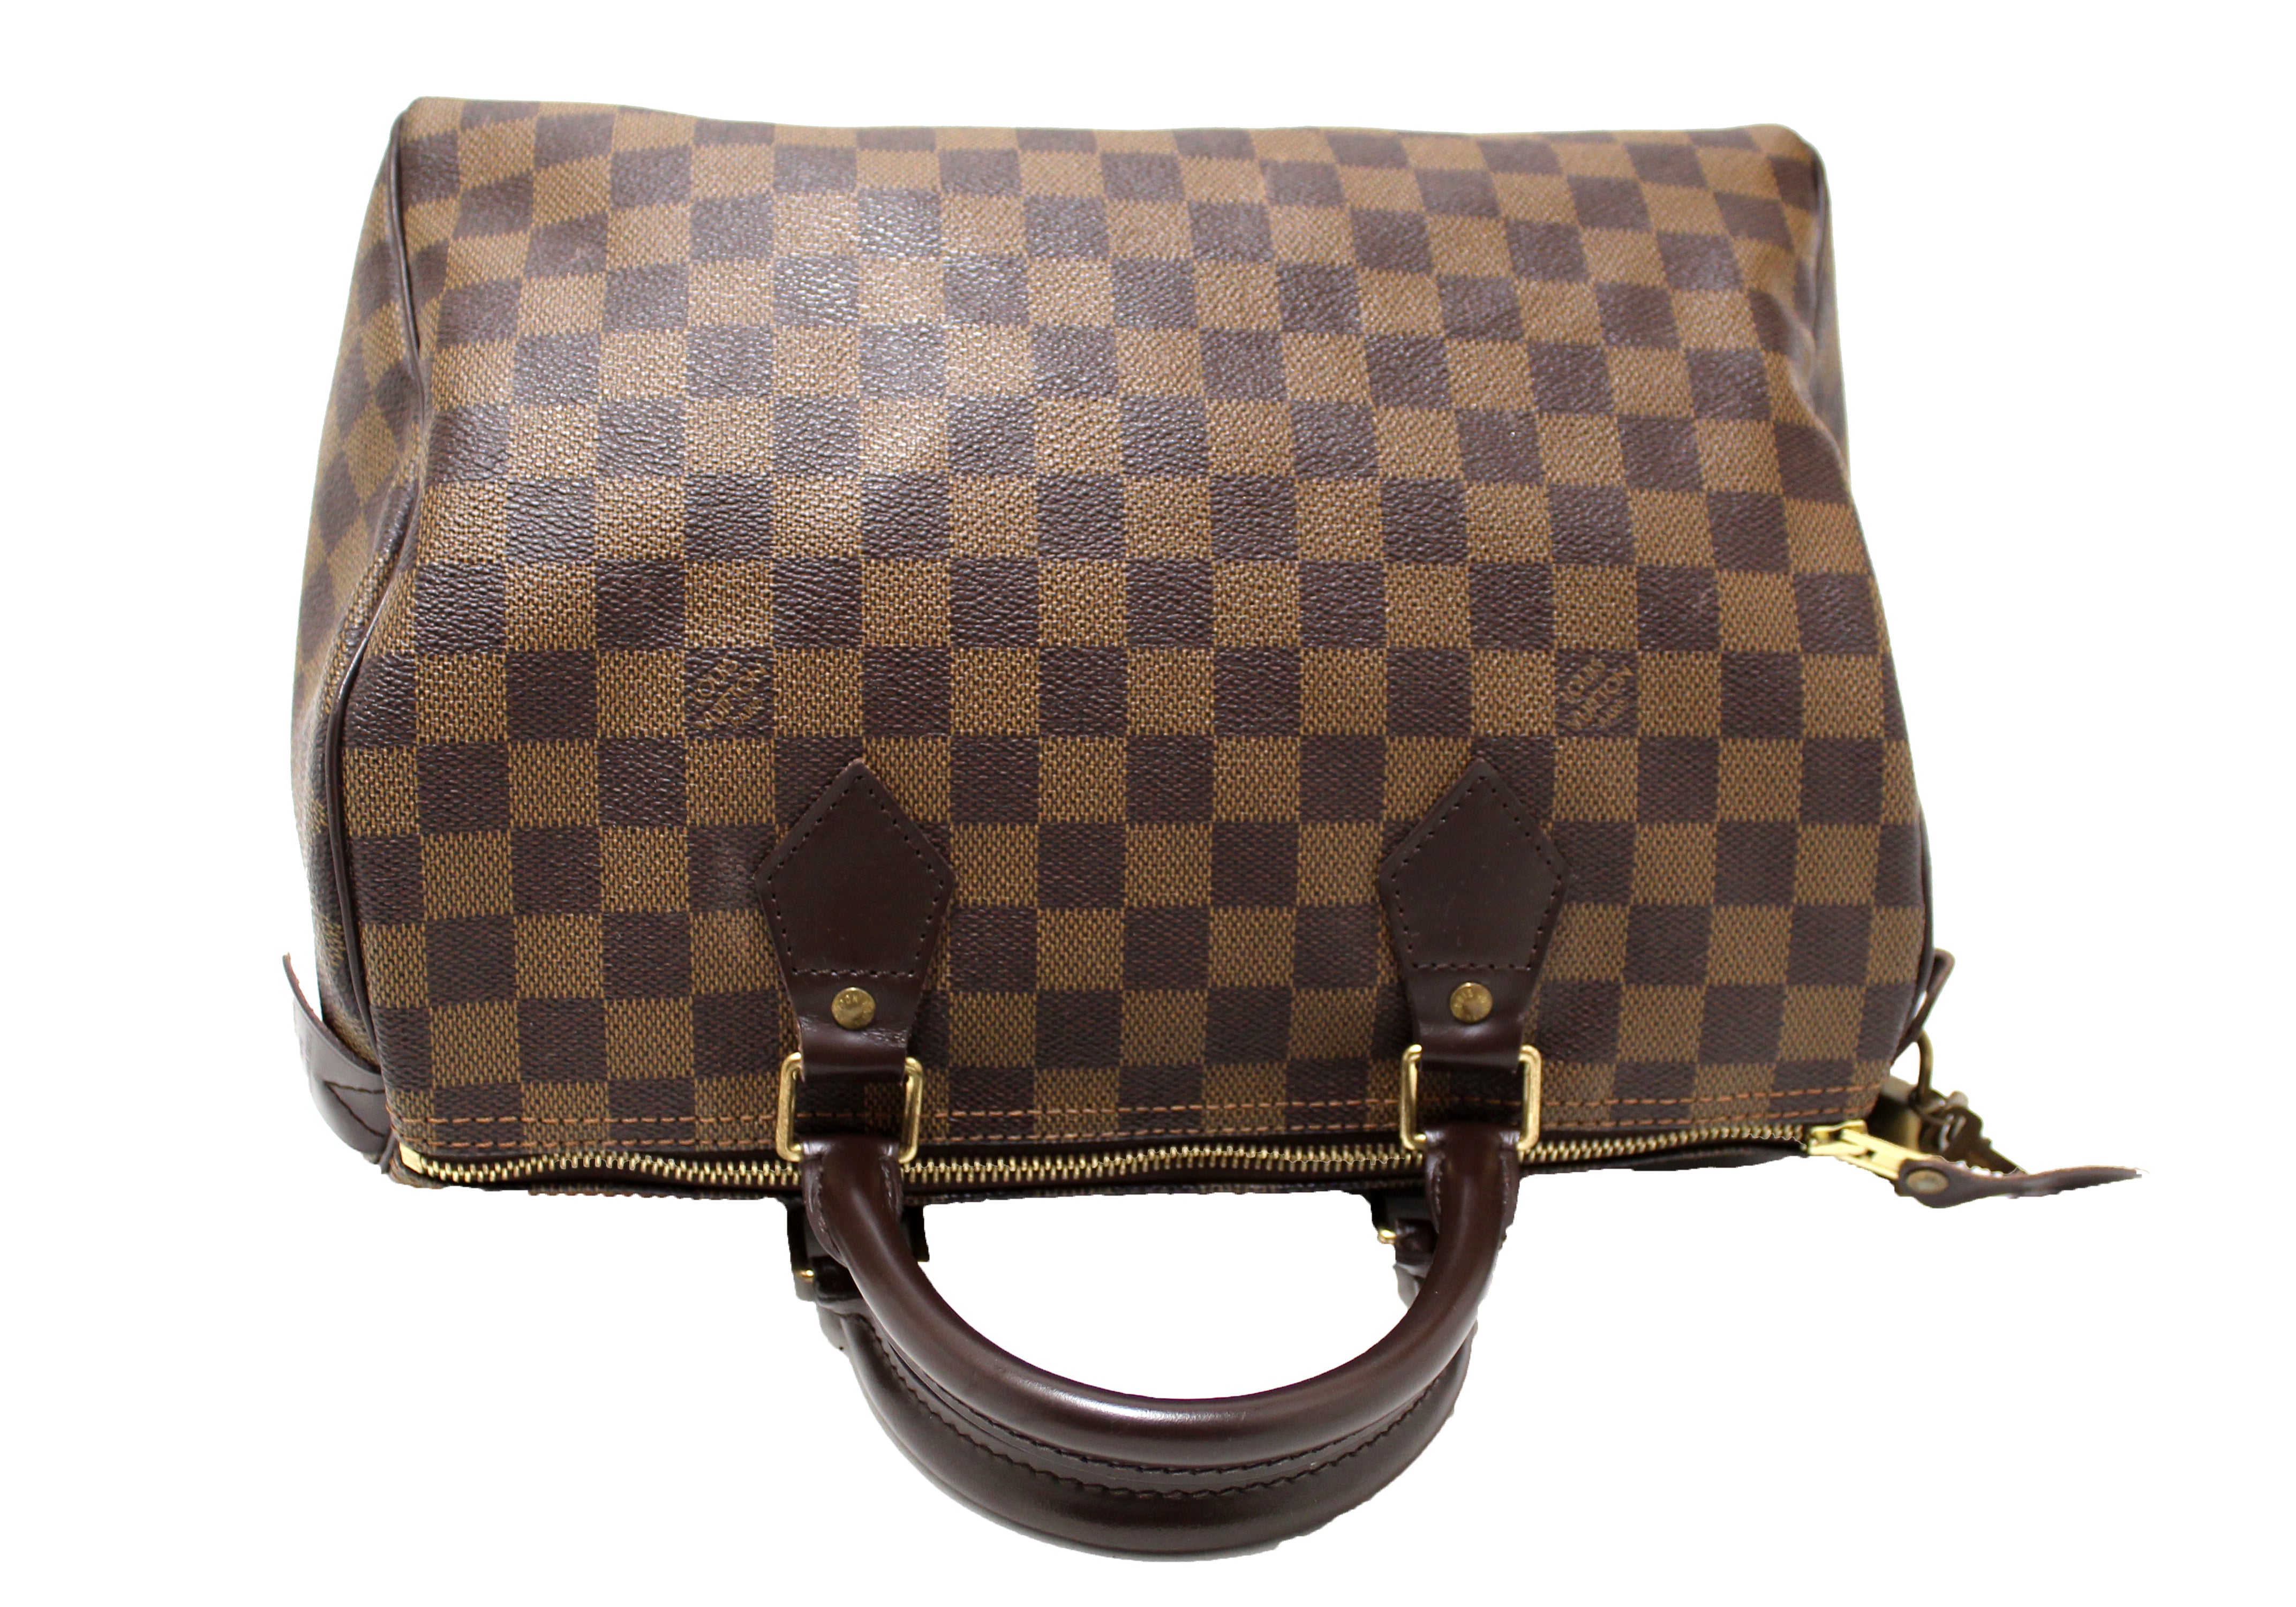 Authentic Louis Vuitton Damier Ebene Speedy 30 Handbag – Paris